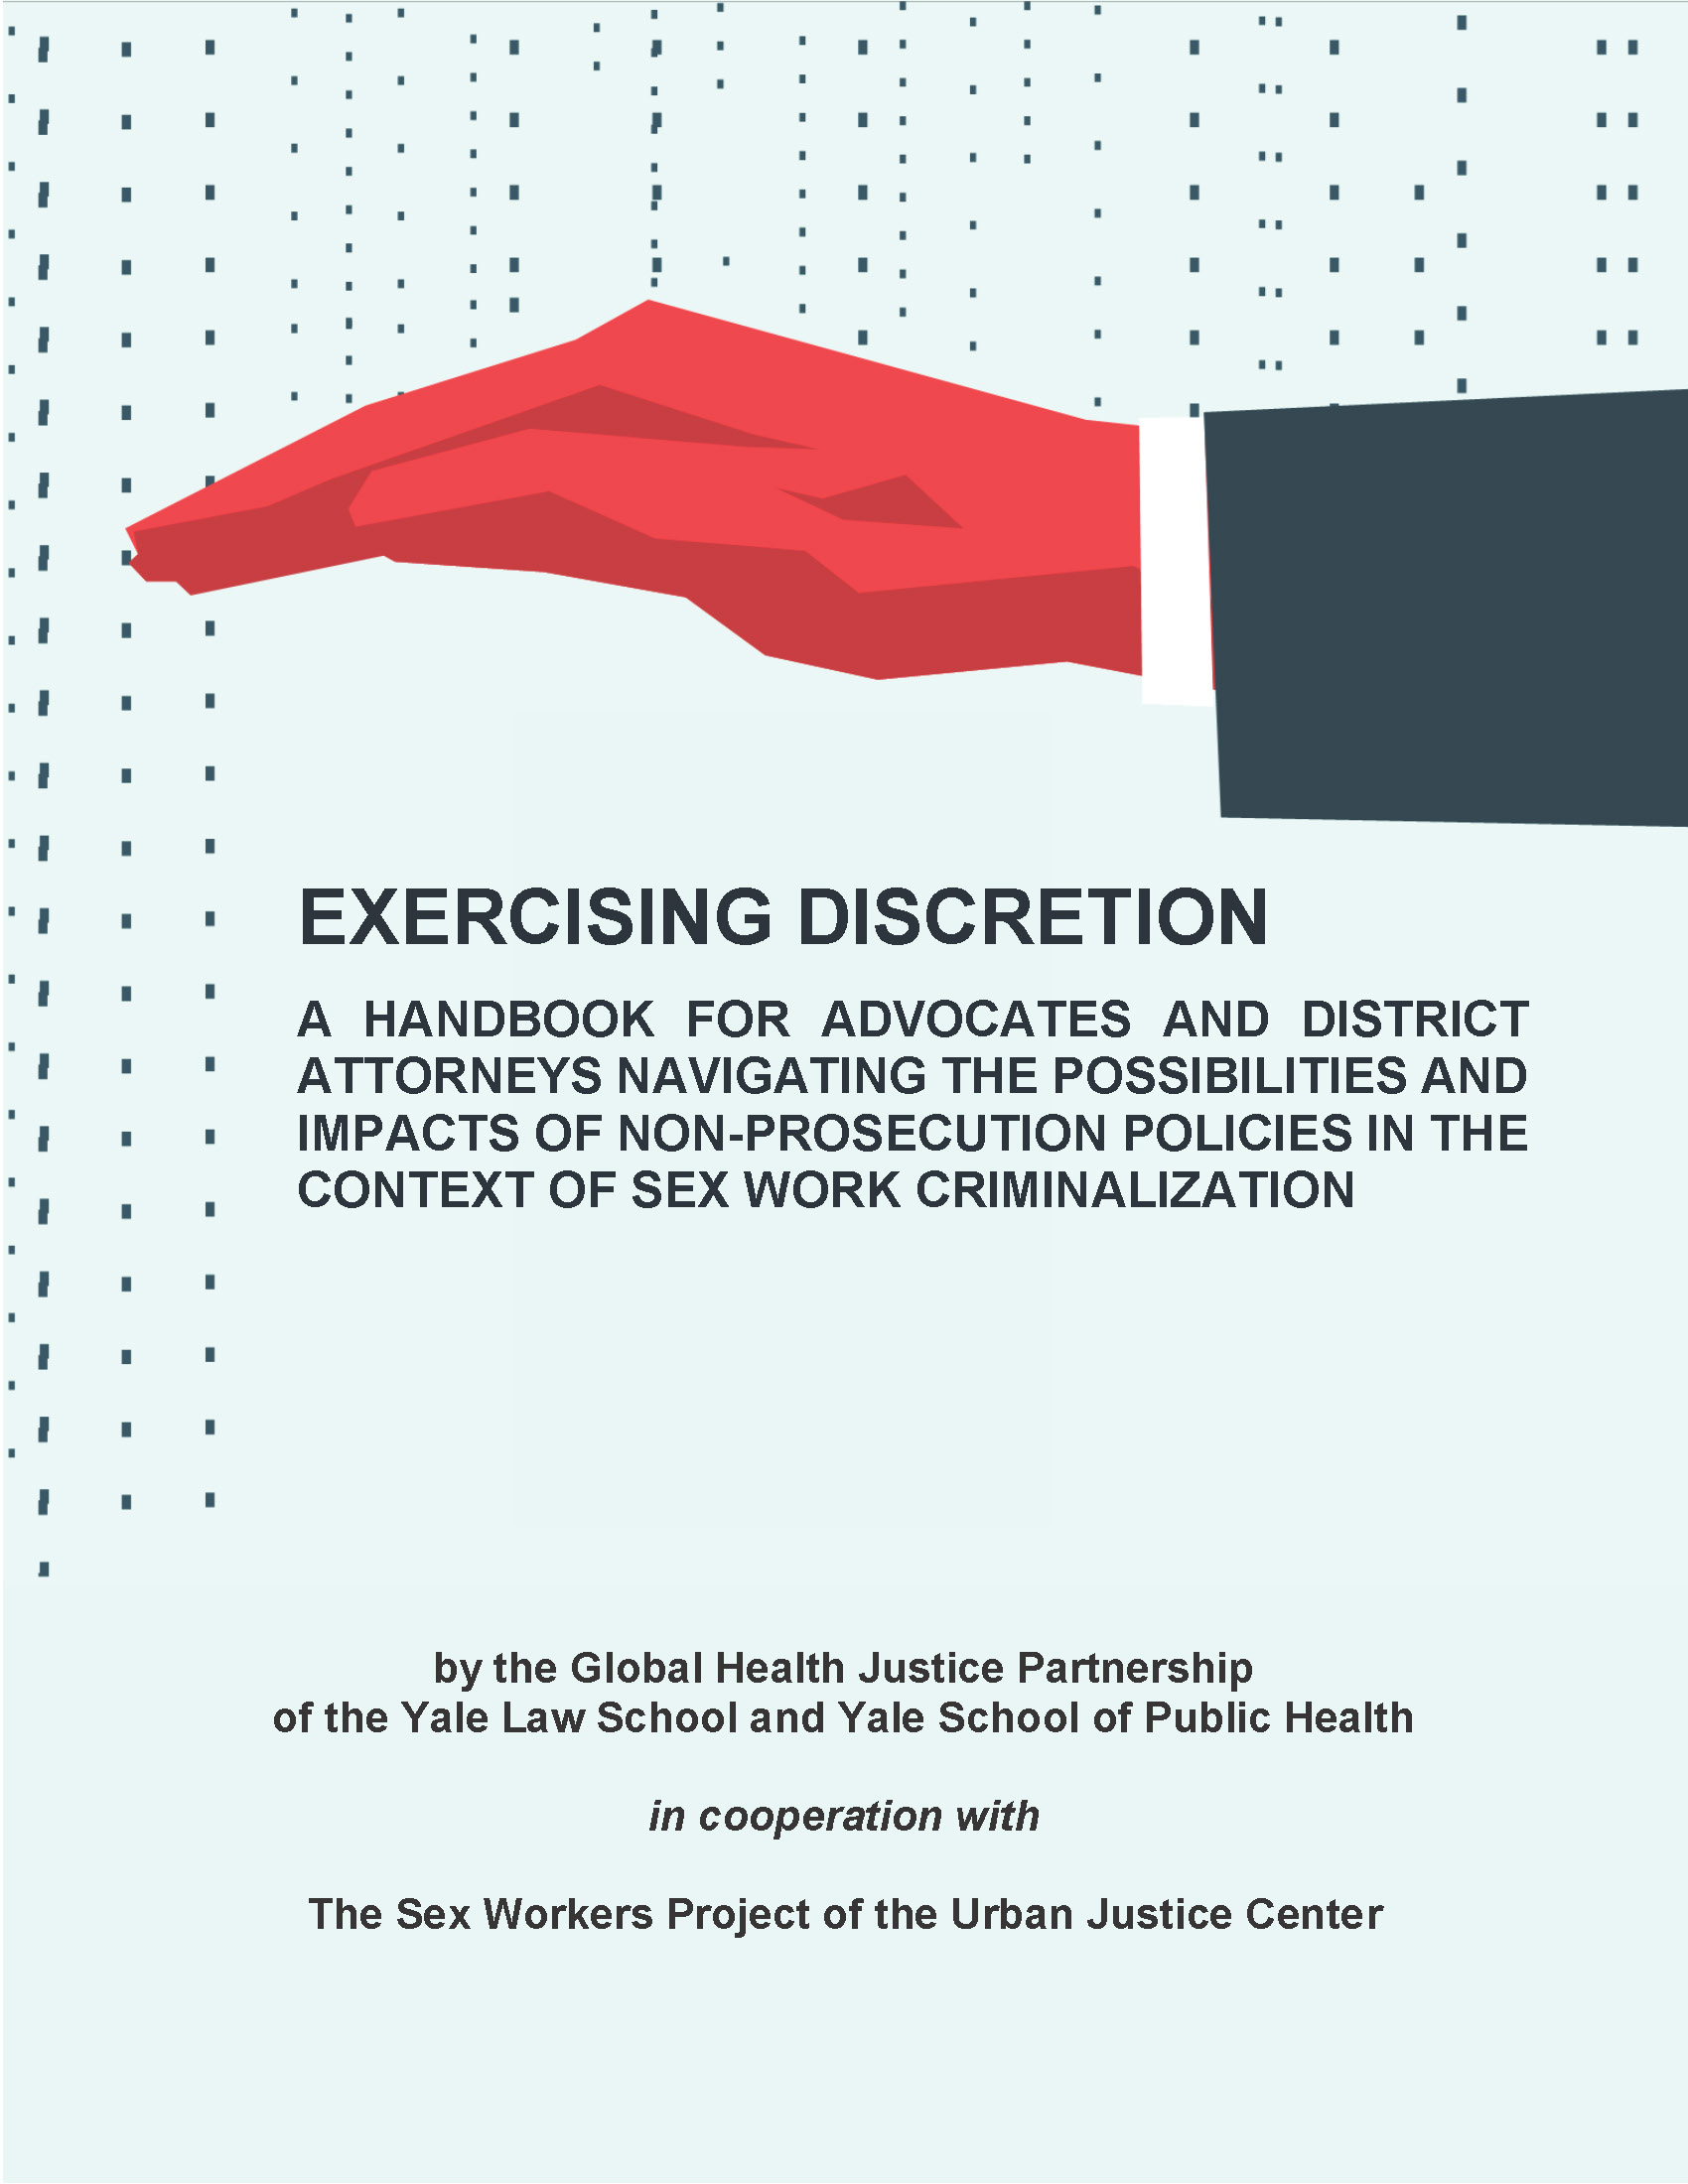 Exercising Discretion handbook cover